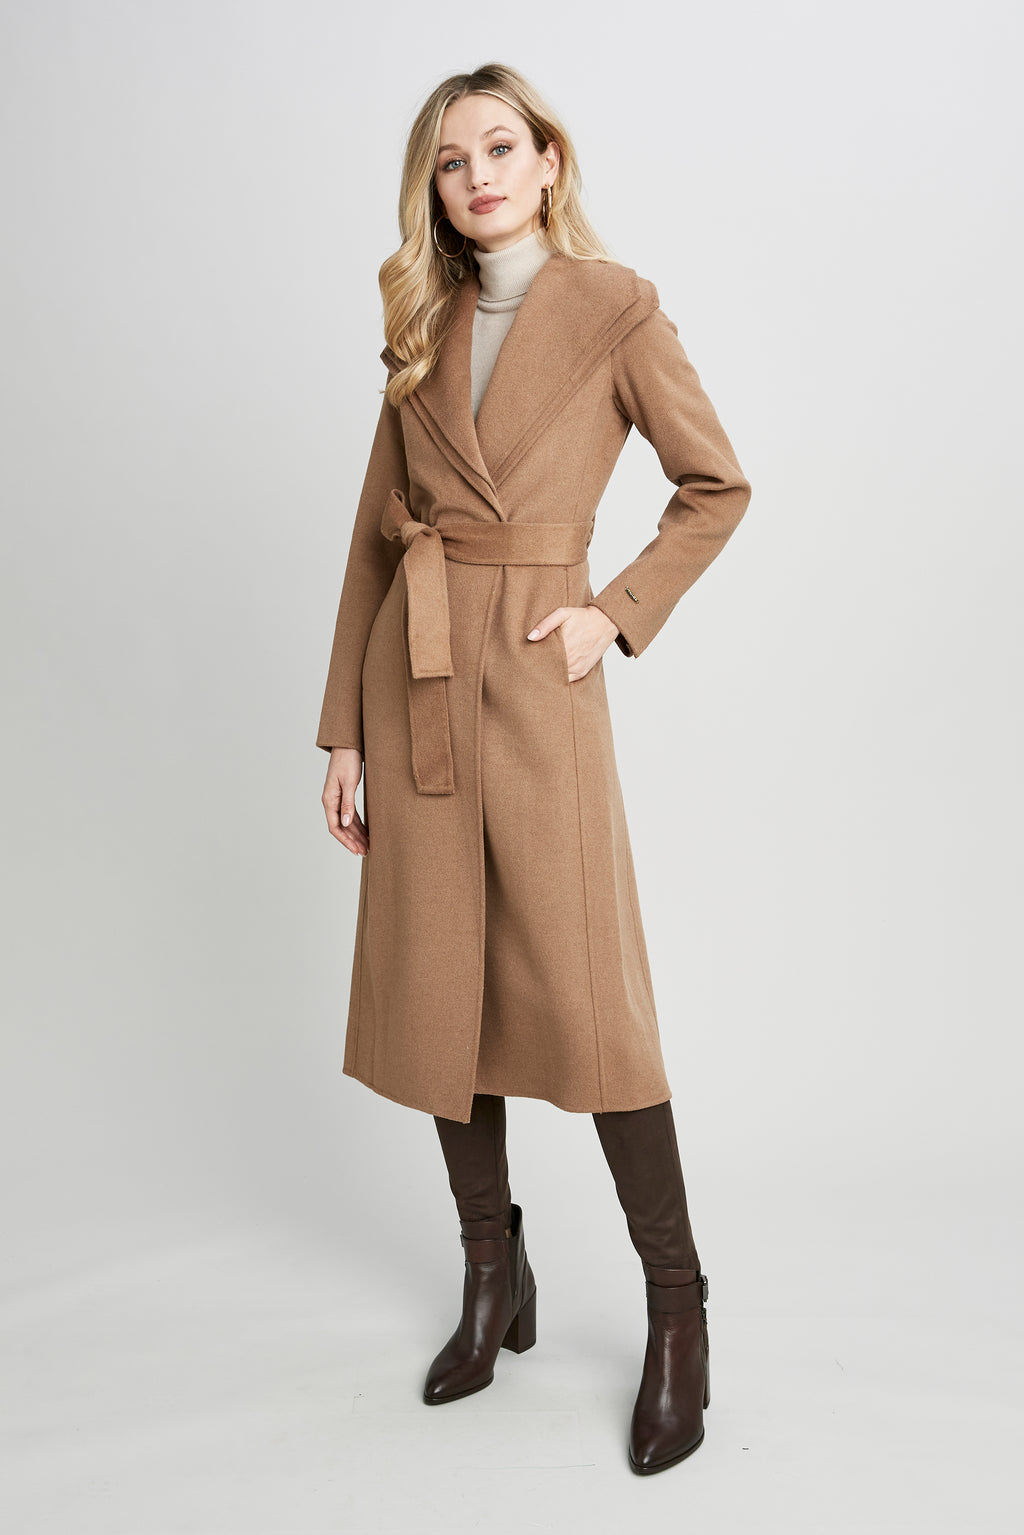 Women's Wool Coats, Wool Blend Coats